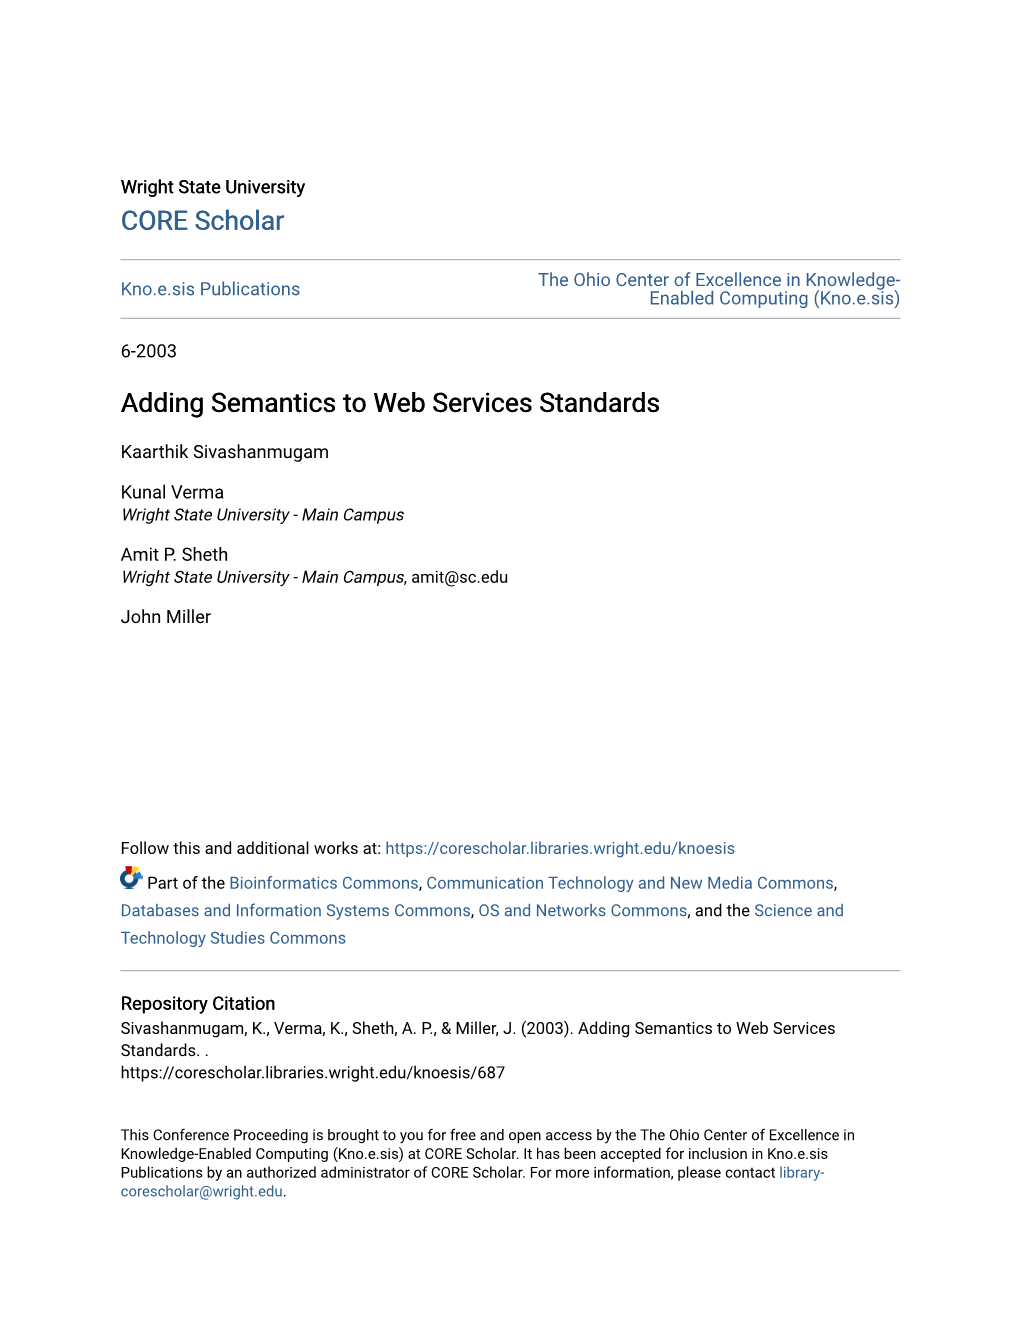 Adding Semantics to Web Services Standards